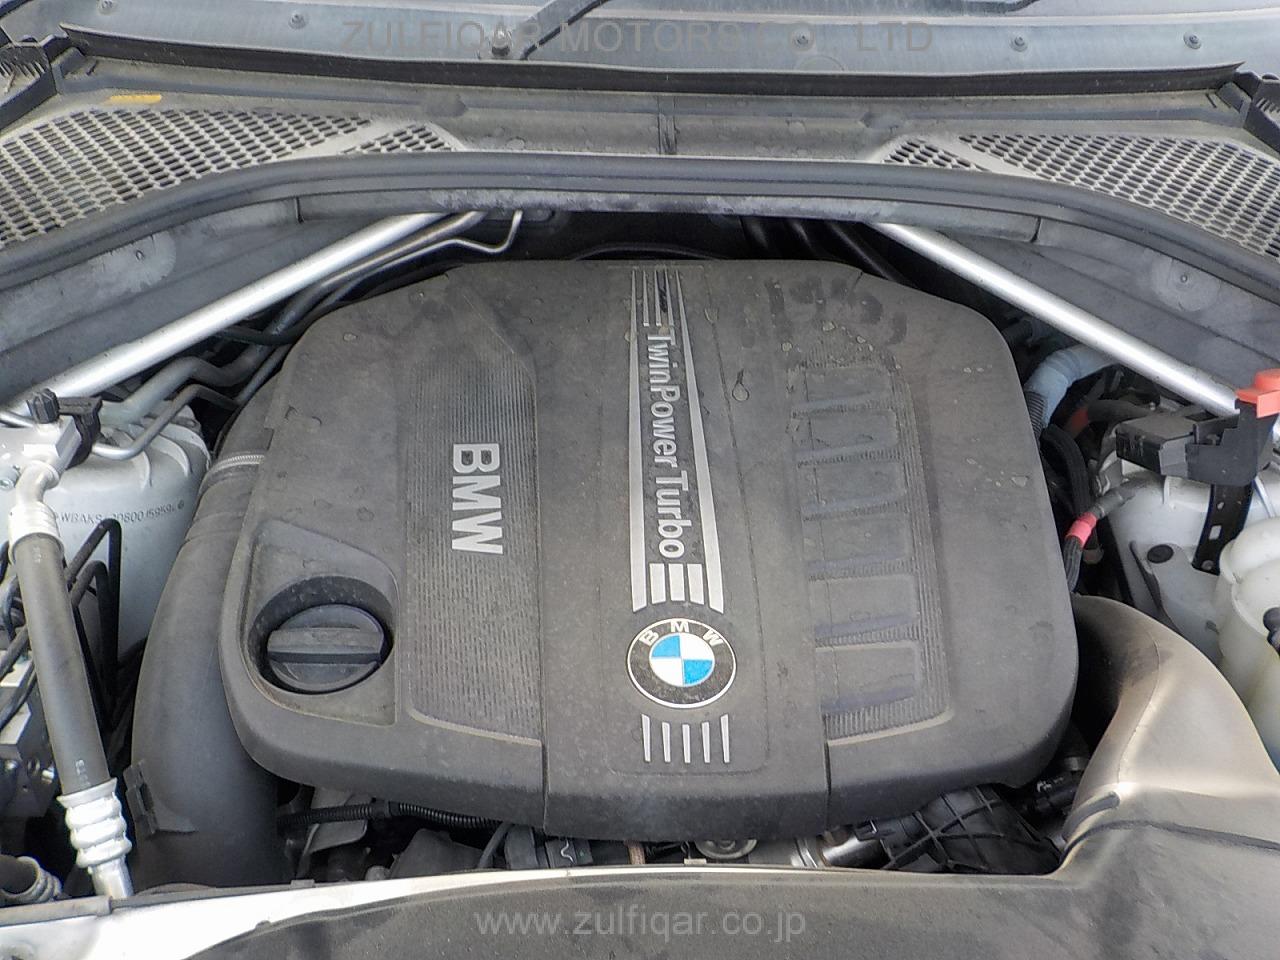 BMW X5 2016 Image 53